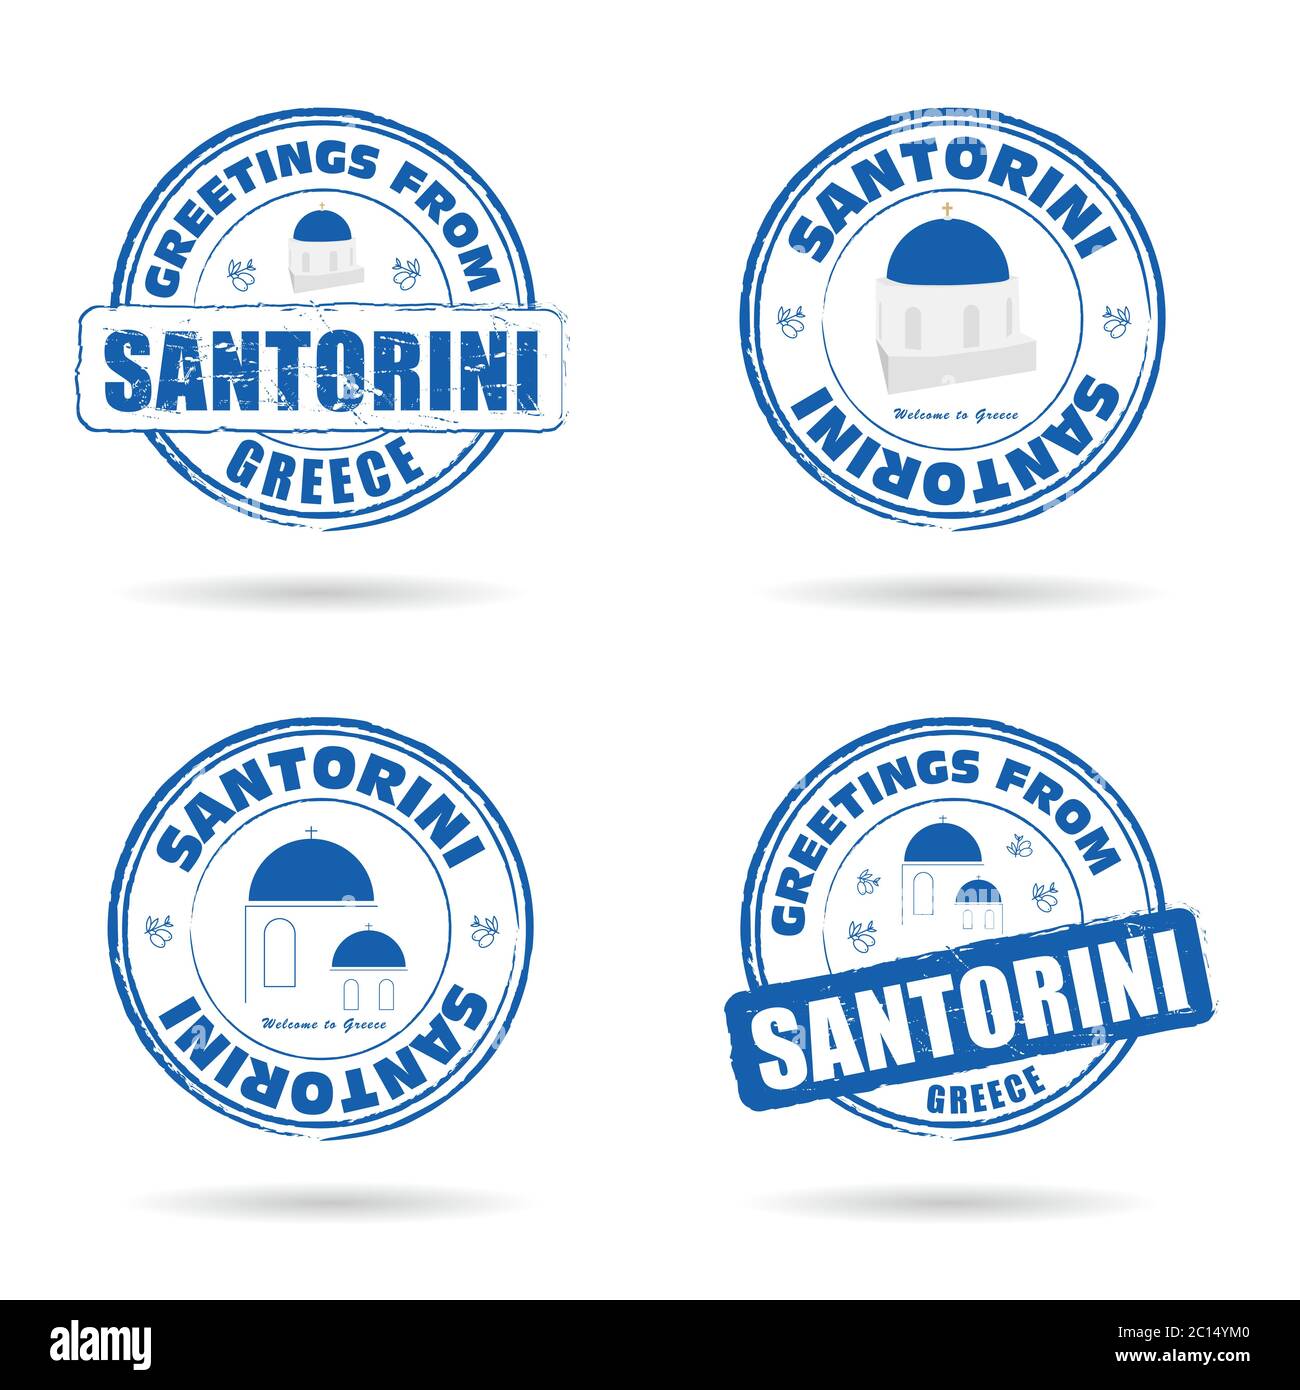 santorini greek island grunge rubber in blue and white color art illustration Stock Vector